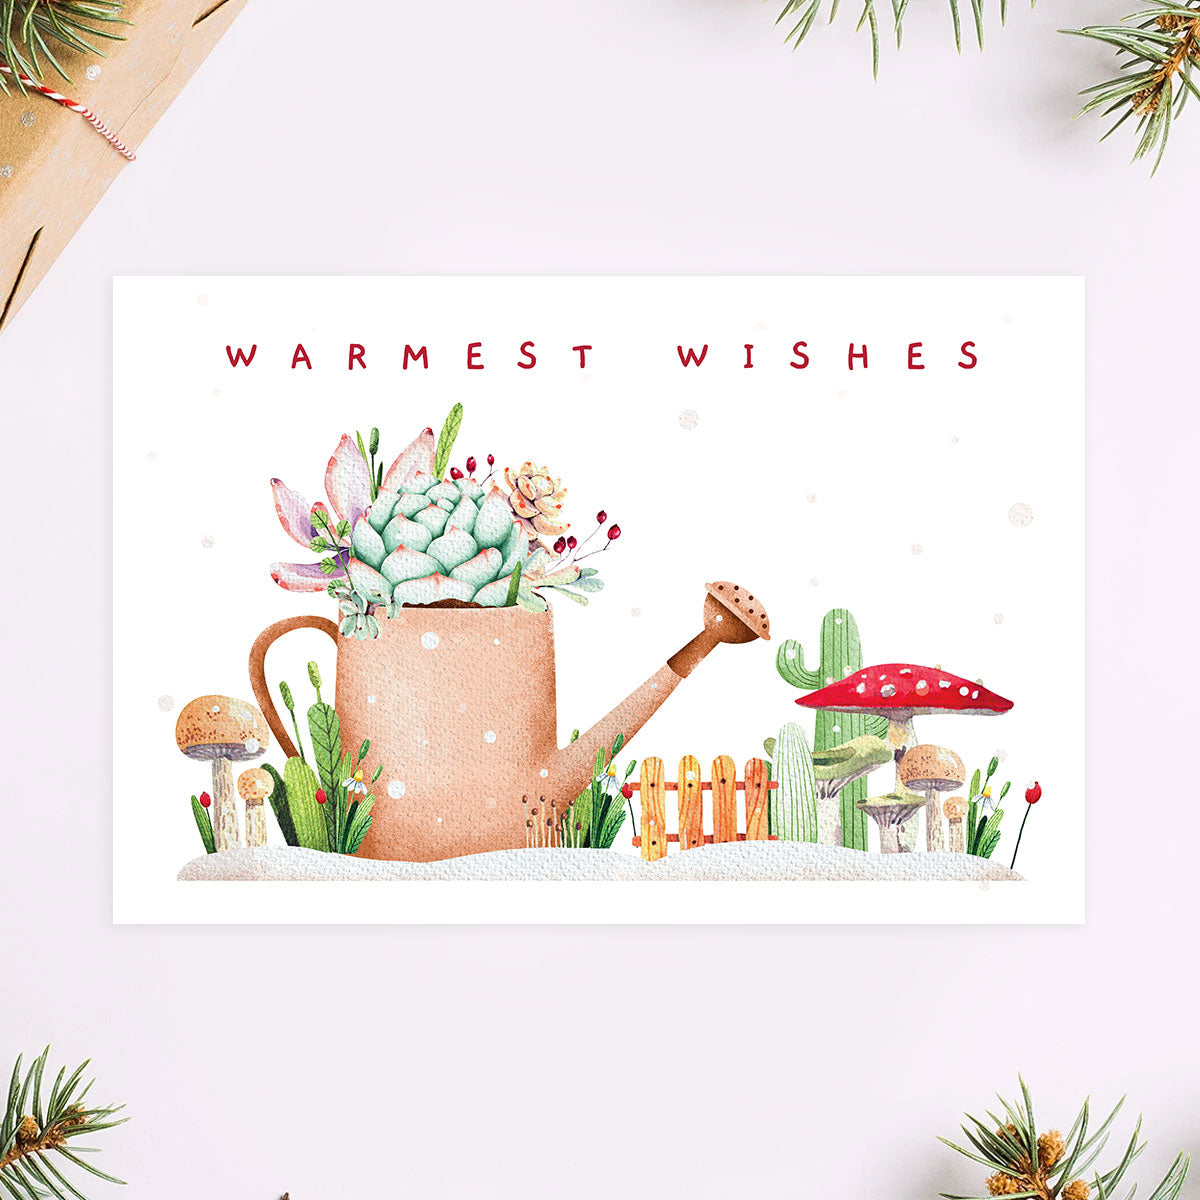 Warmest Wishes Card for sale, Succulent Warmest Wishes Card for sale, Cactus Greeting Card, Succulents Greeting Card, Succulents Gift Ideas, Warmest Wishes Cactus Card, Warmest Wishes Succulents Card